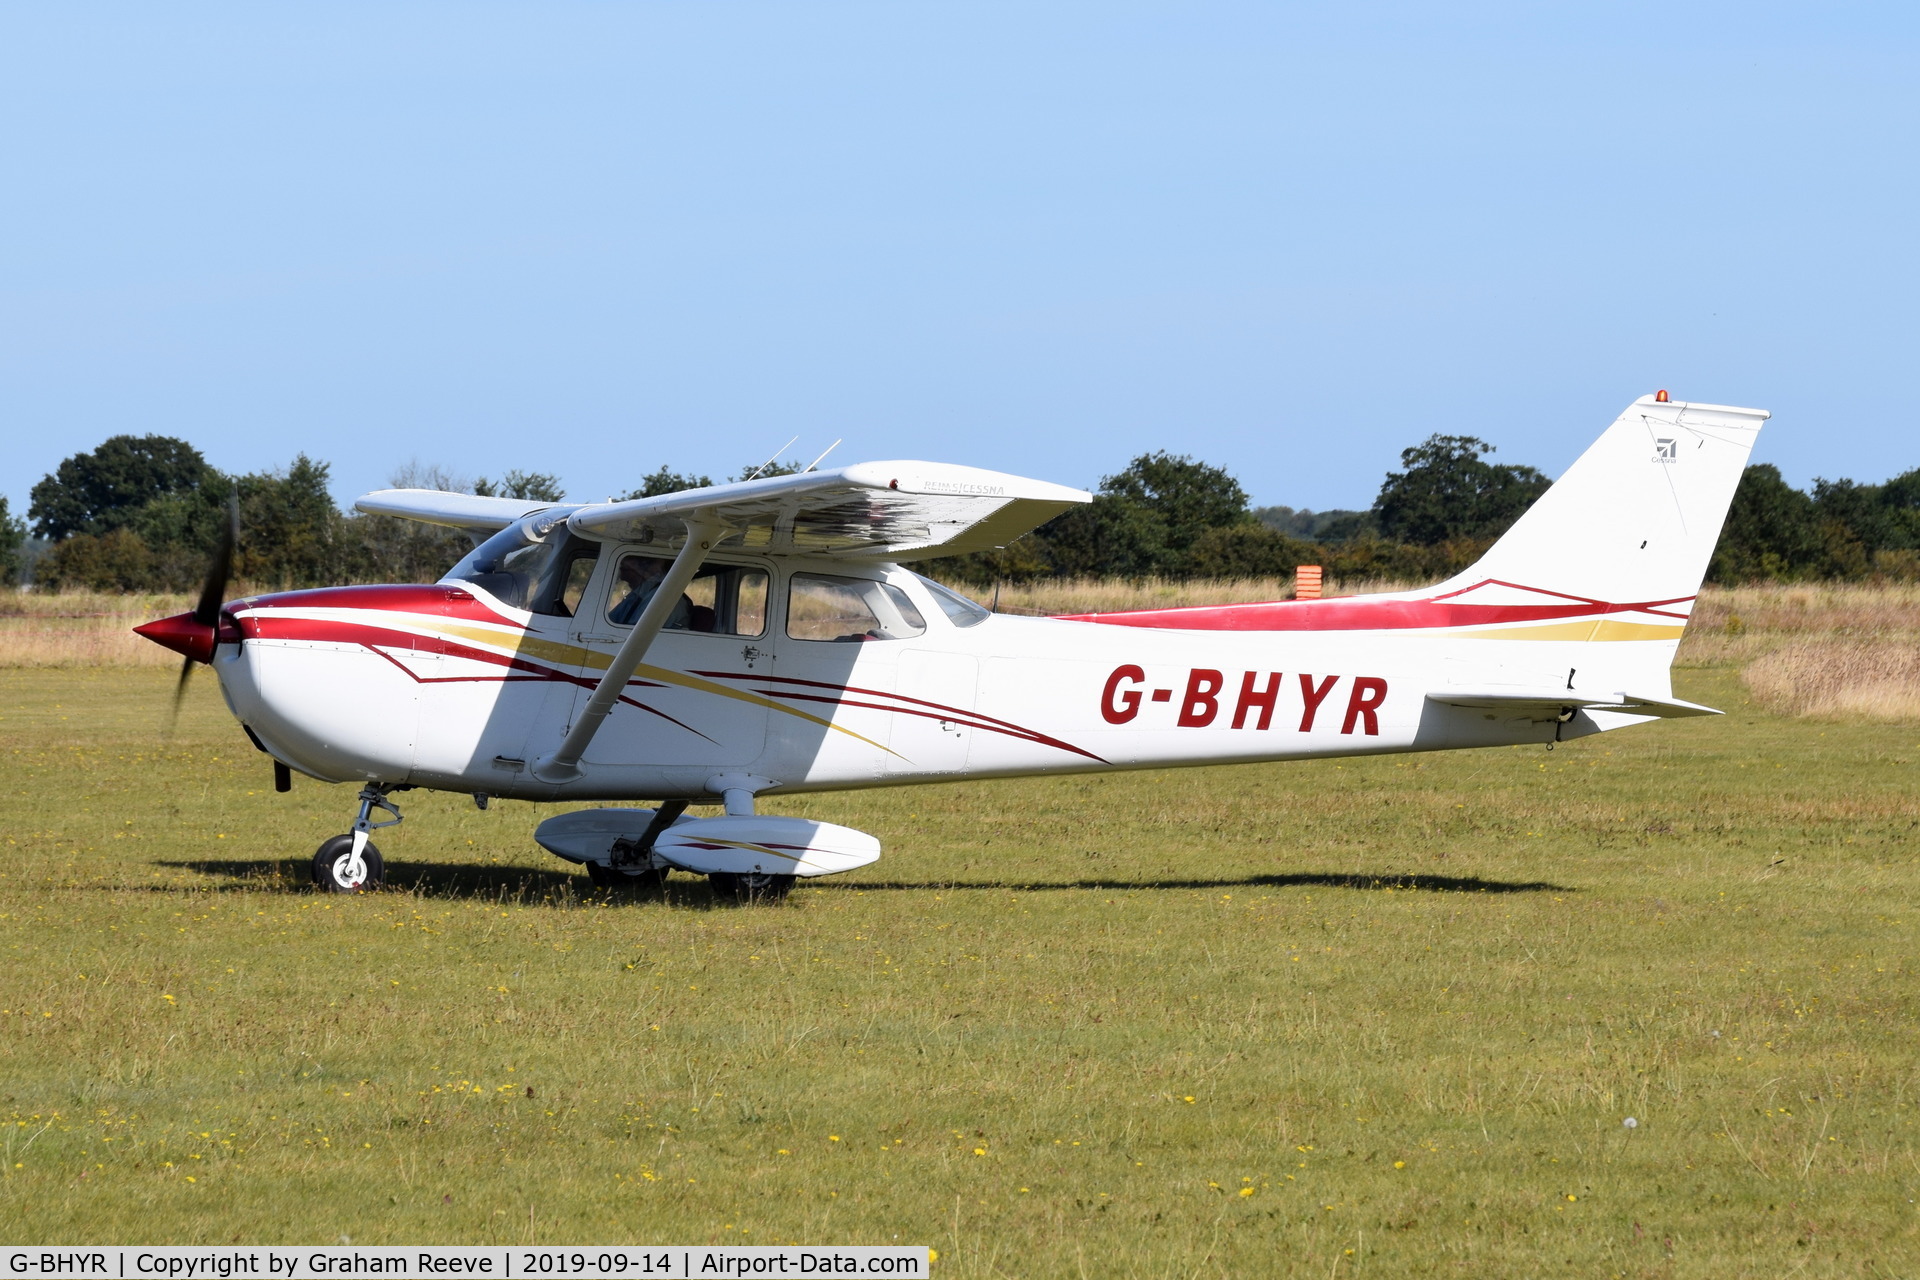 G-BHYR, 1973 Reims F172M Skyhawk Skyhawk C/N 0922, Just landed at, Bury St Edmunds, Rougham Airfield, UK.